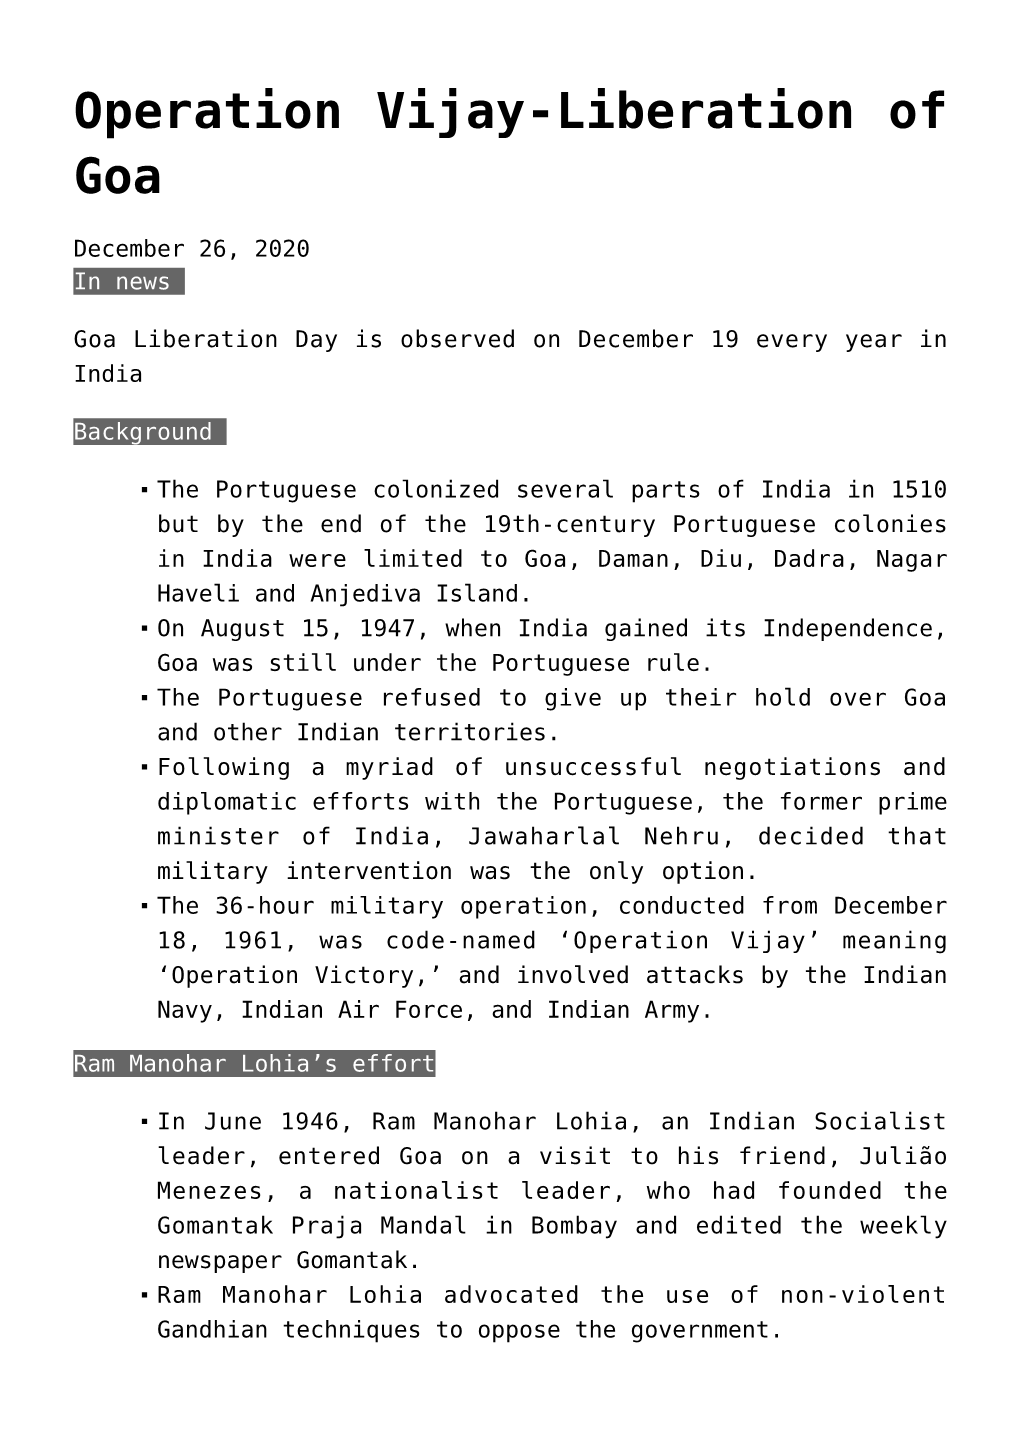 Operation Vijay-Liberation of Goa